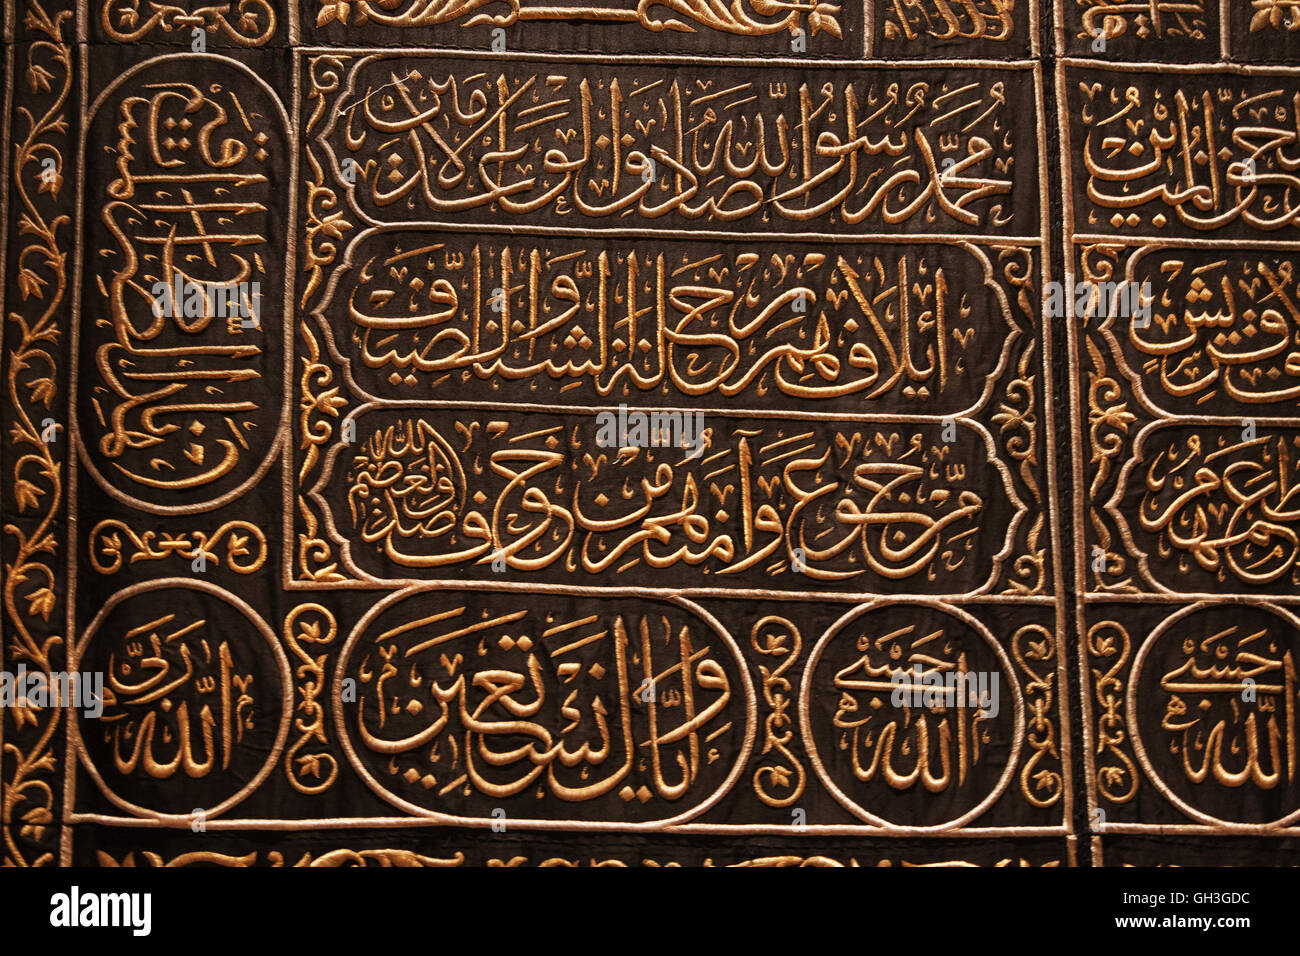 Arabic script on the black cover of the 'black stone' Stock Photo